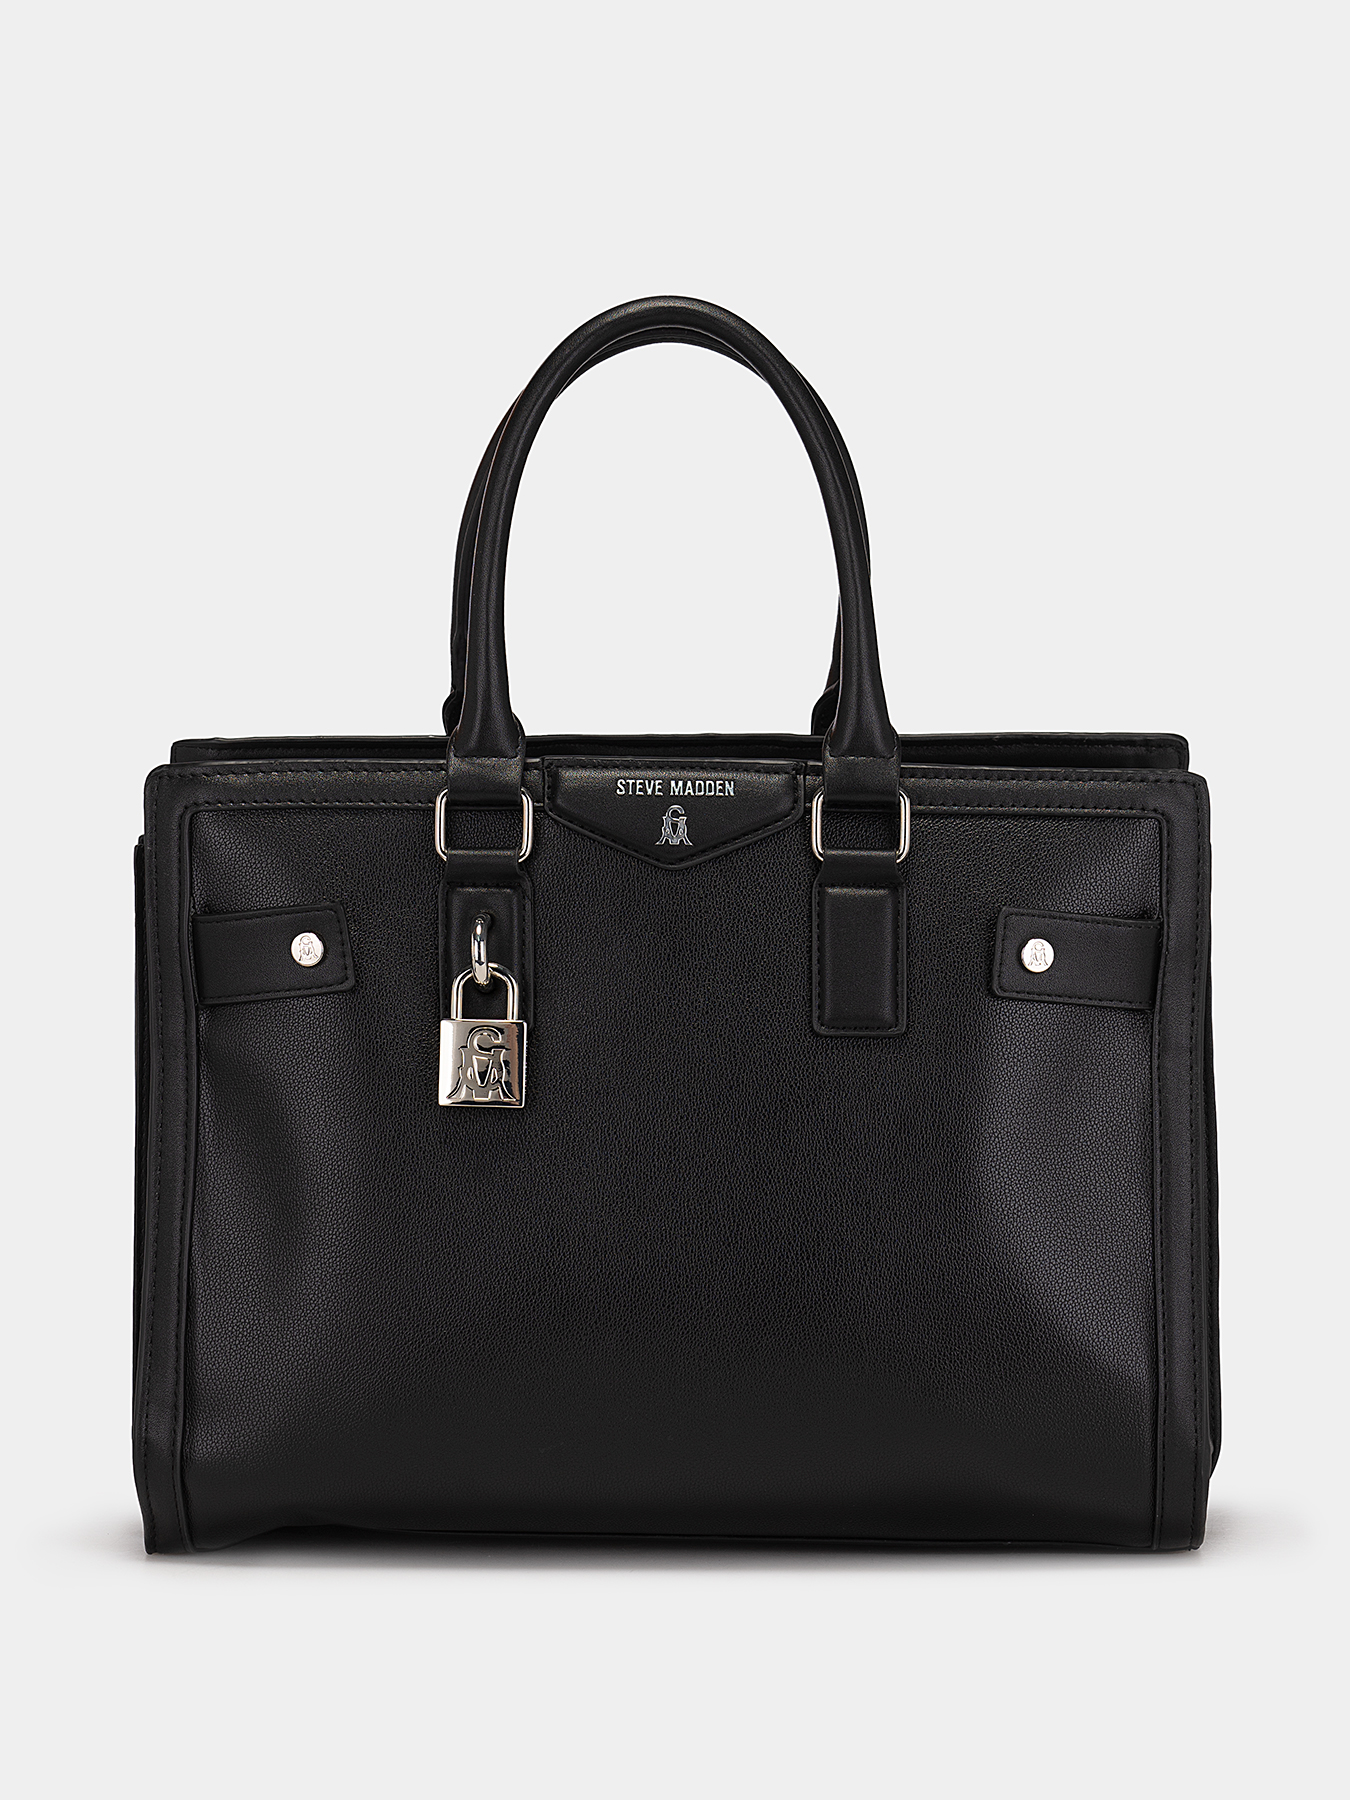 BMANOR faux leather bag brand STEVE MADDEN — Globalbrandsstore.com/en